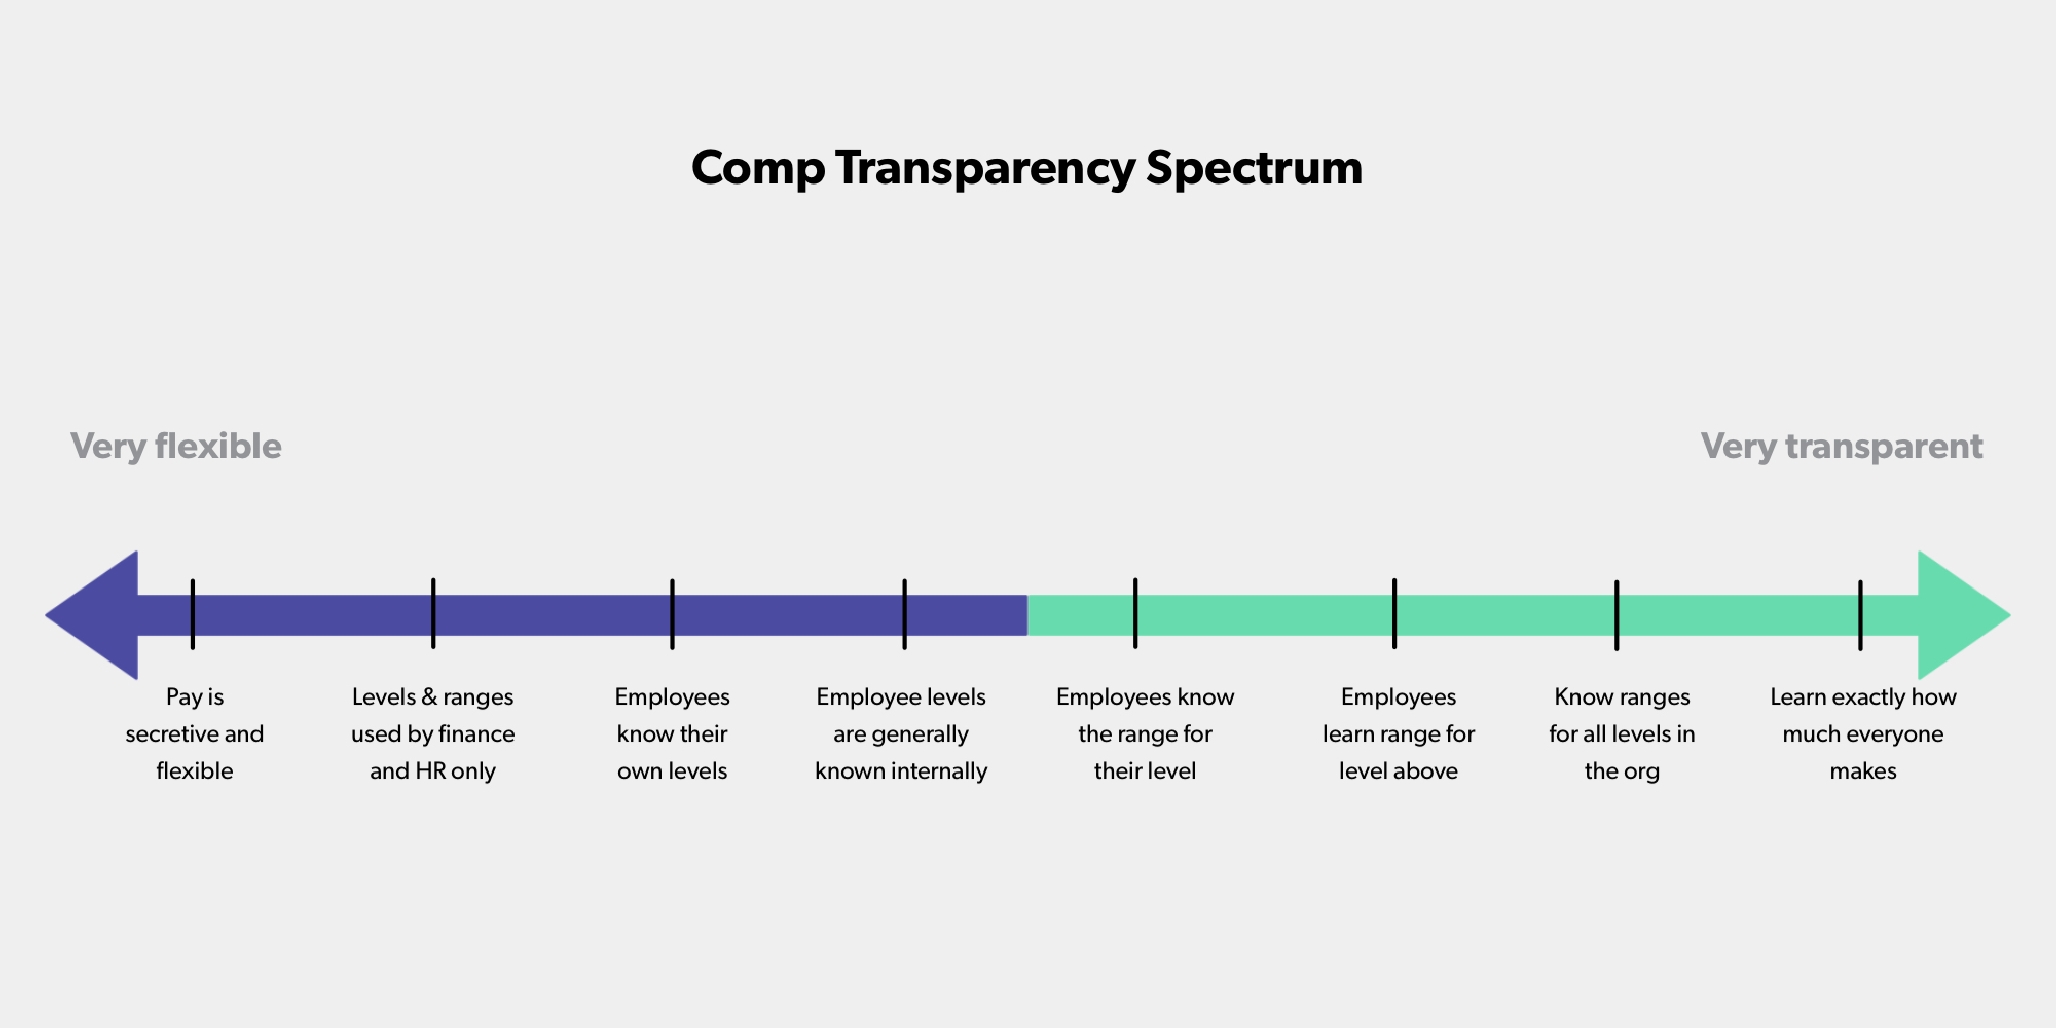 Comp transparency spectrum